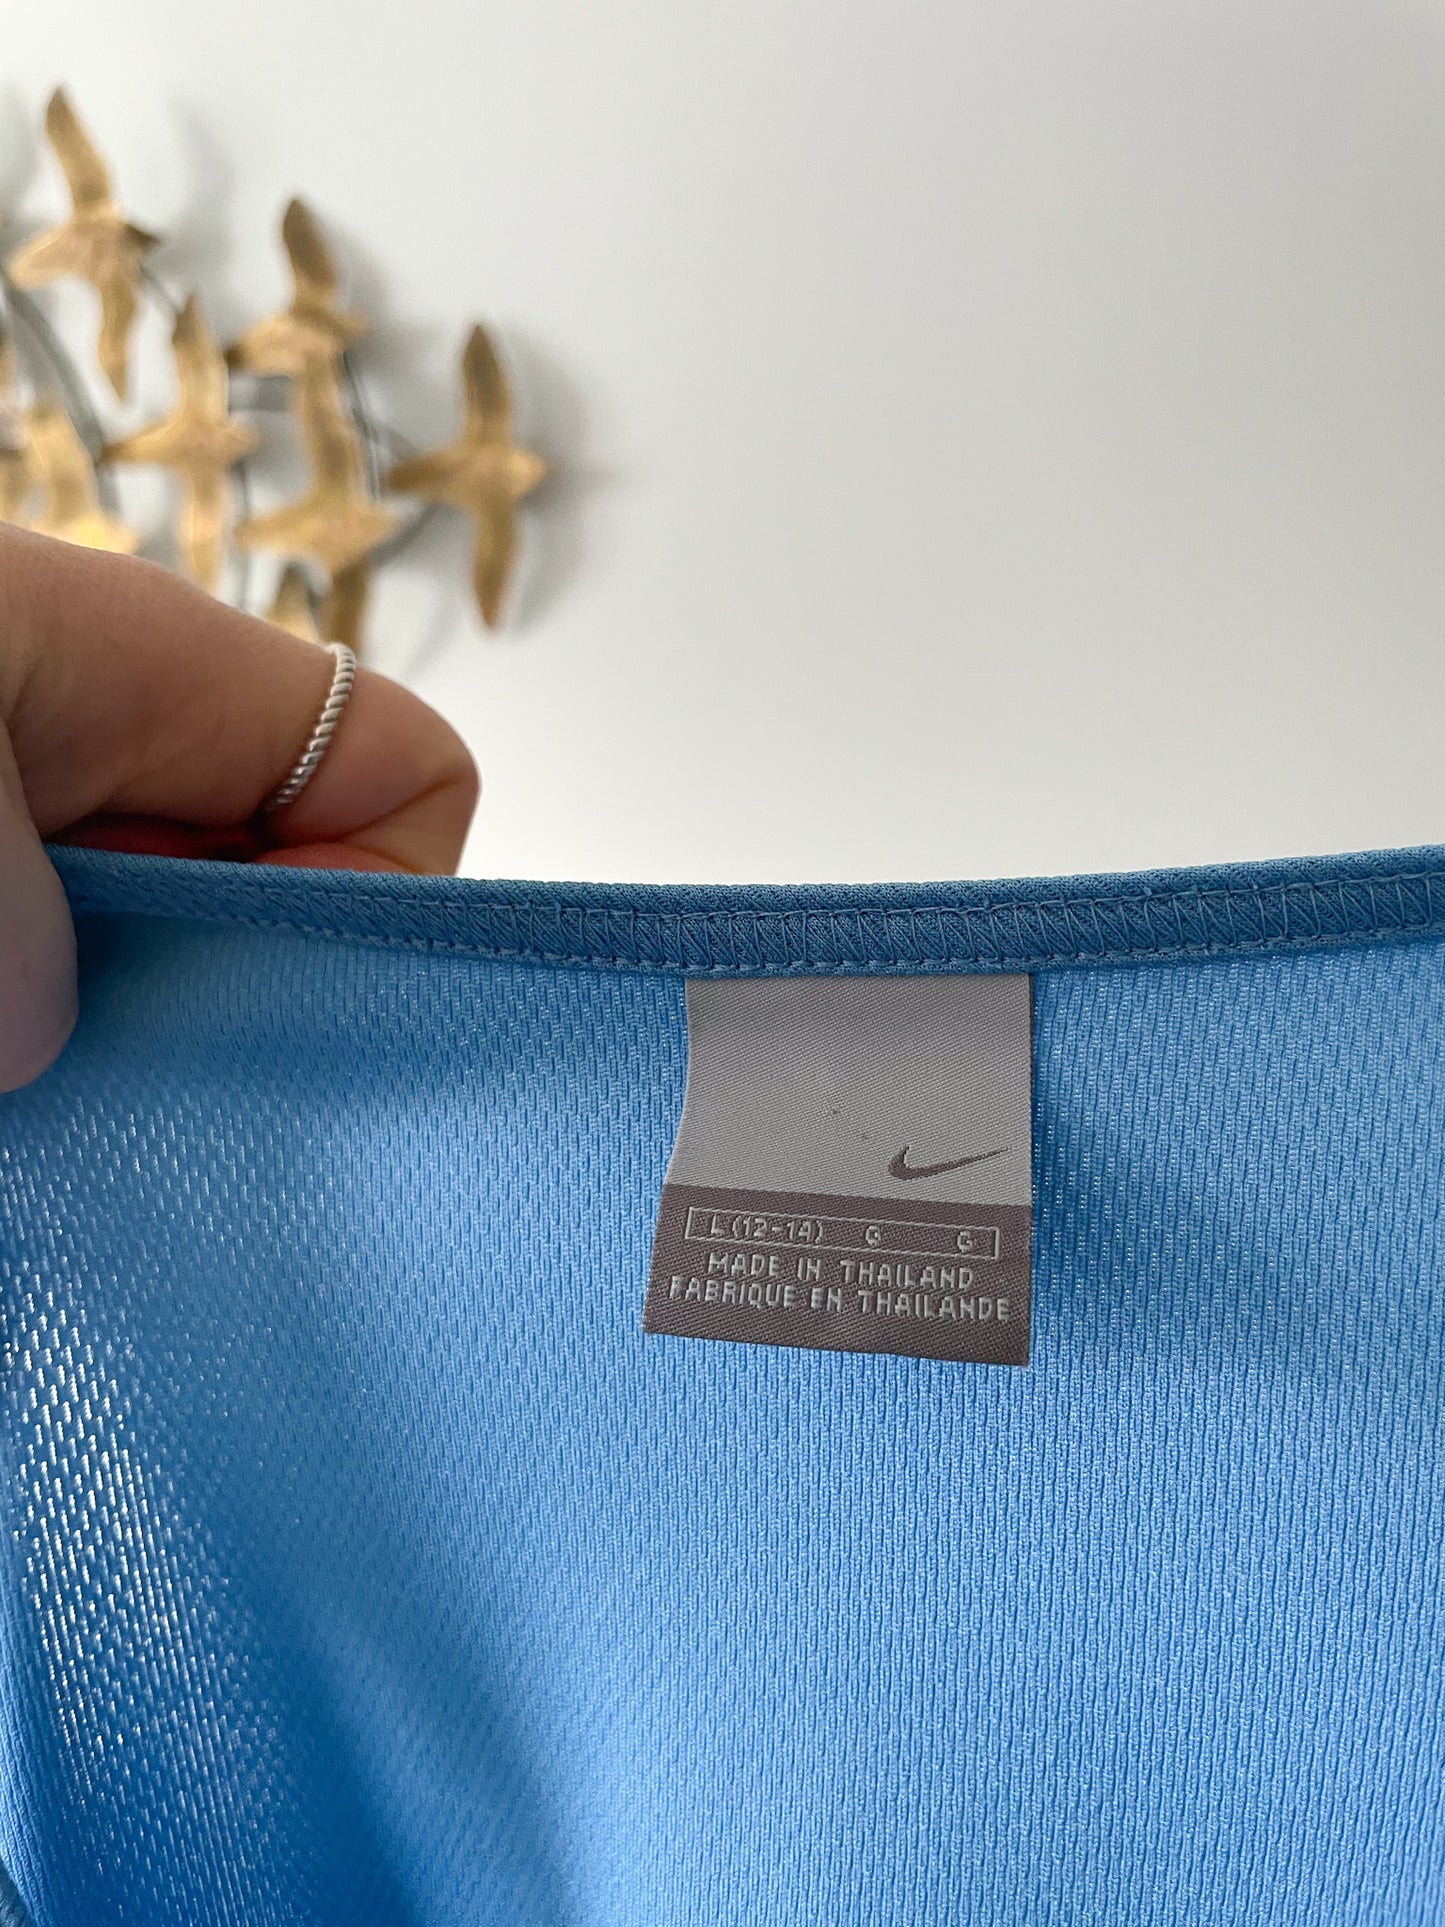 Nike Blue V-Neck Quick Dry Sleeveless Top - Large